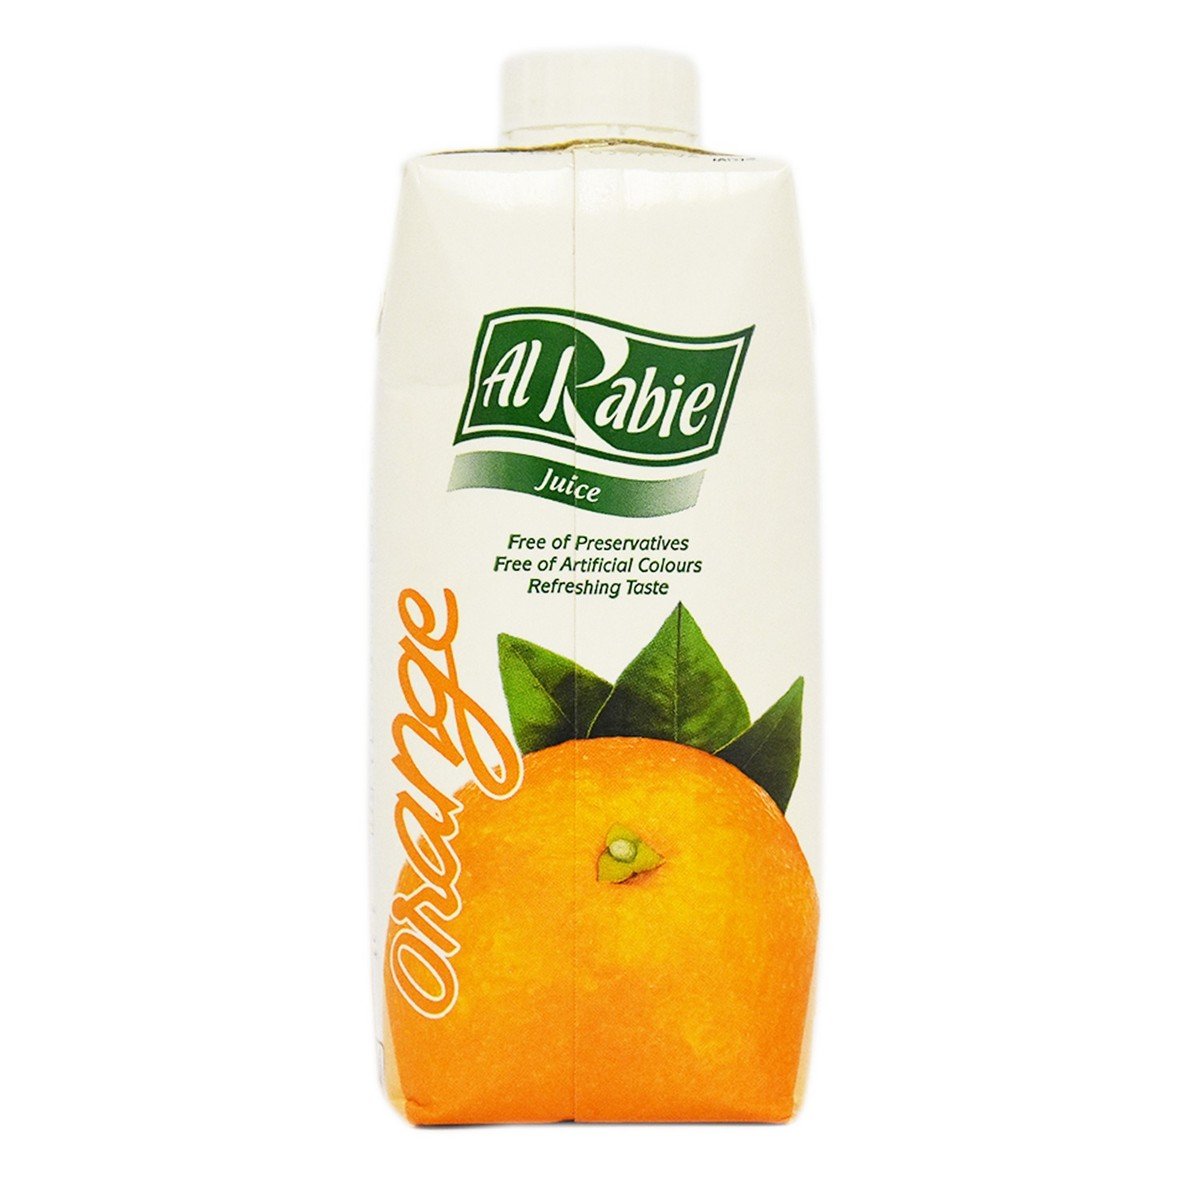 Al Rabie Orange Juice 330 ml